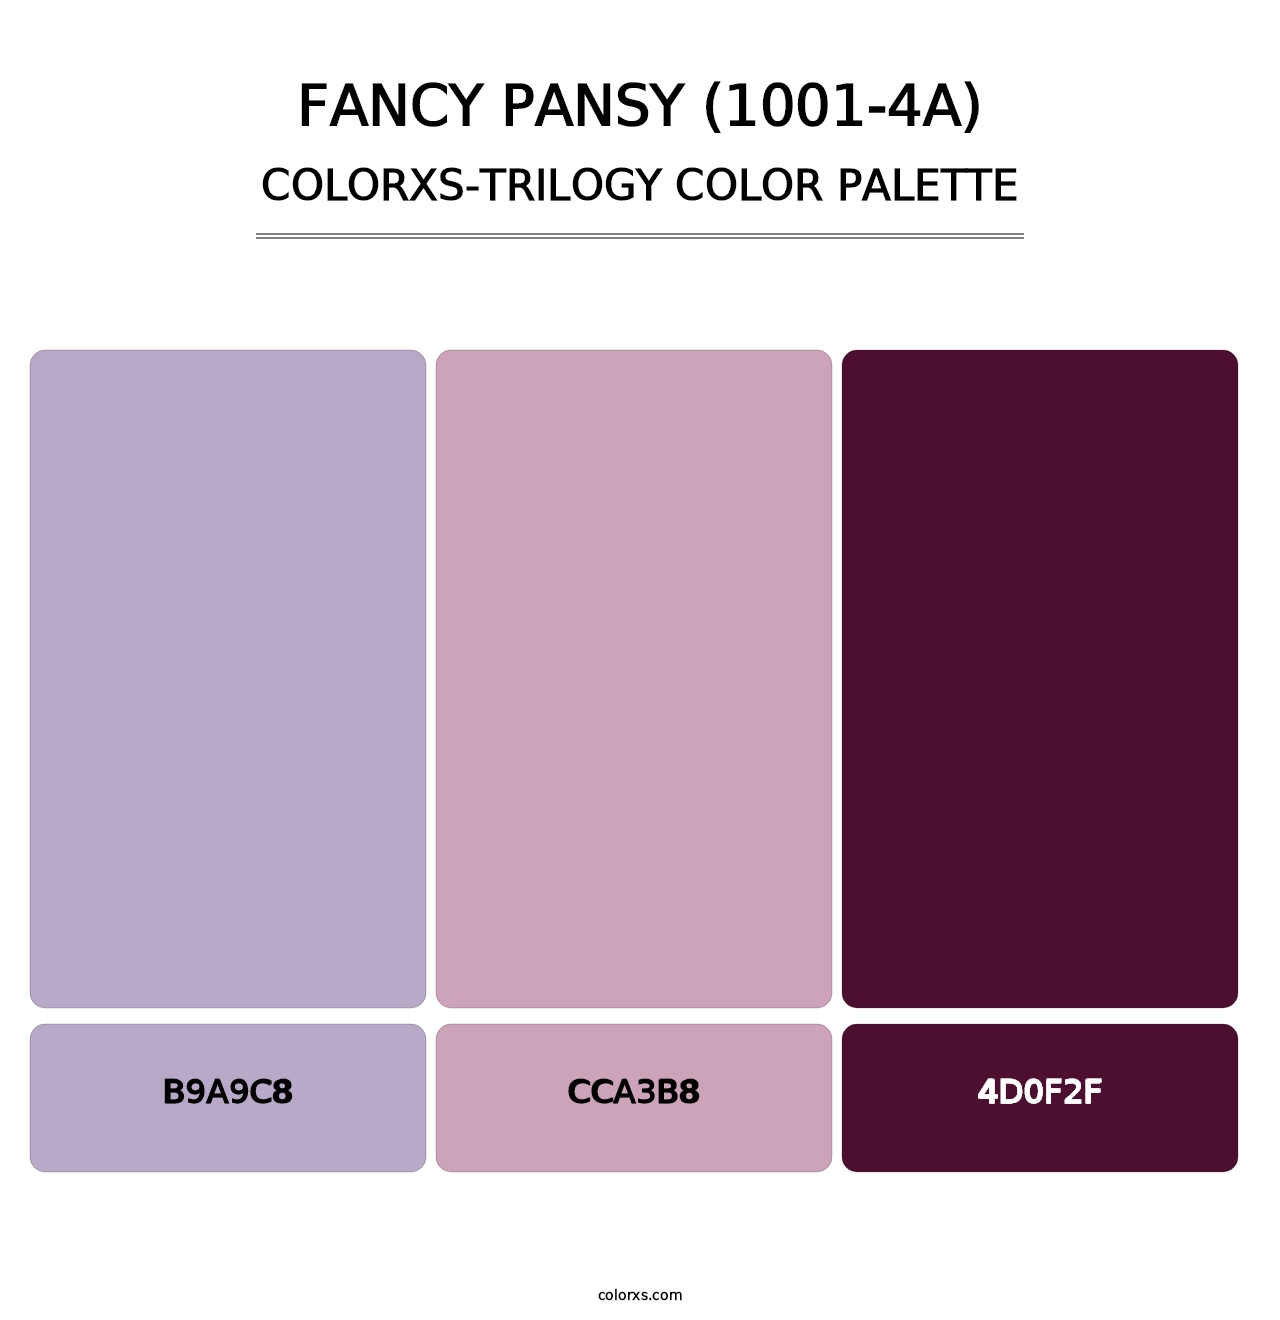 Fancy Pansy (1001-4A) - Colorxs Trilogy Palette